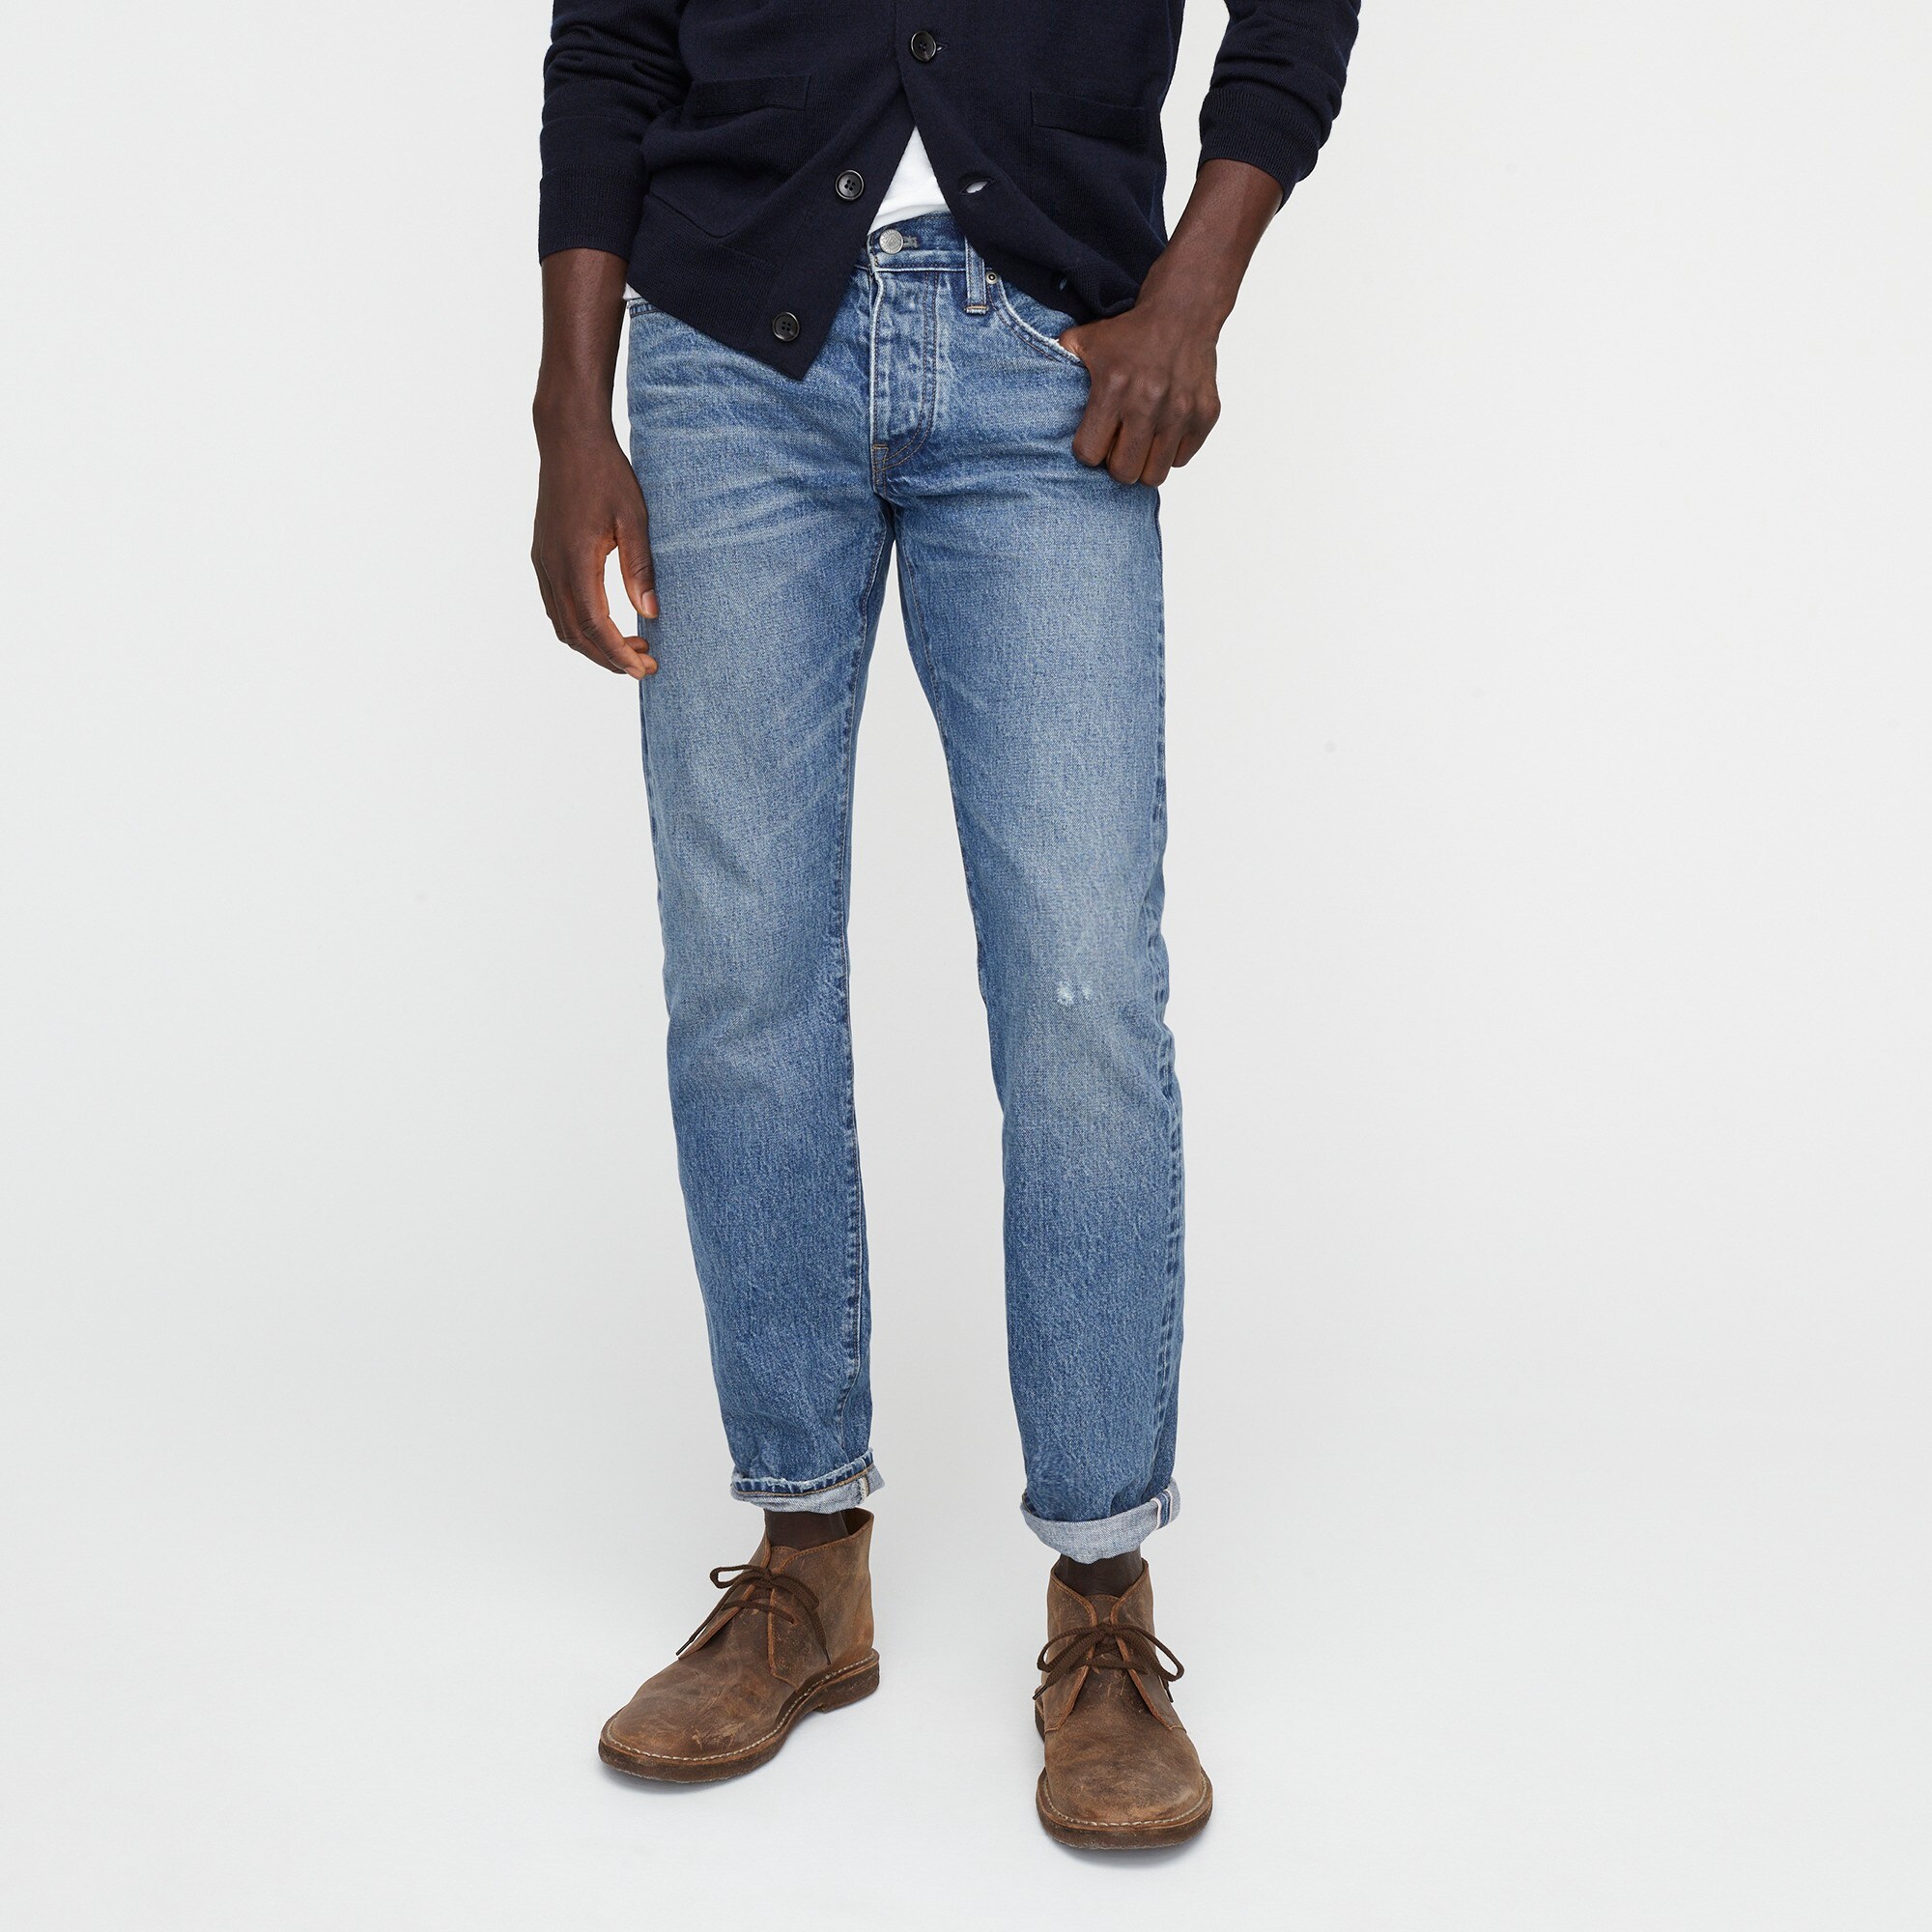 best fitting jeans for men